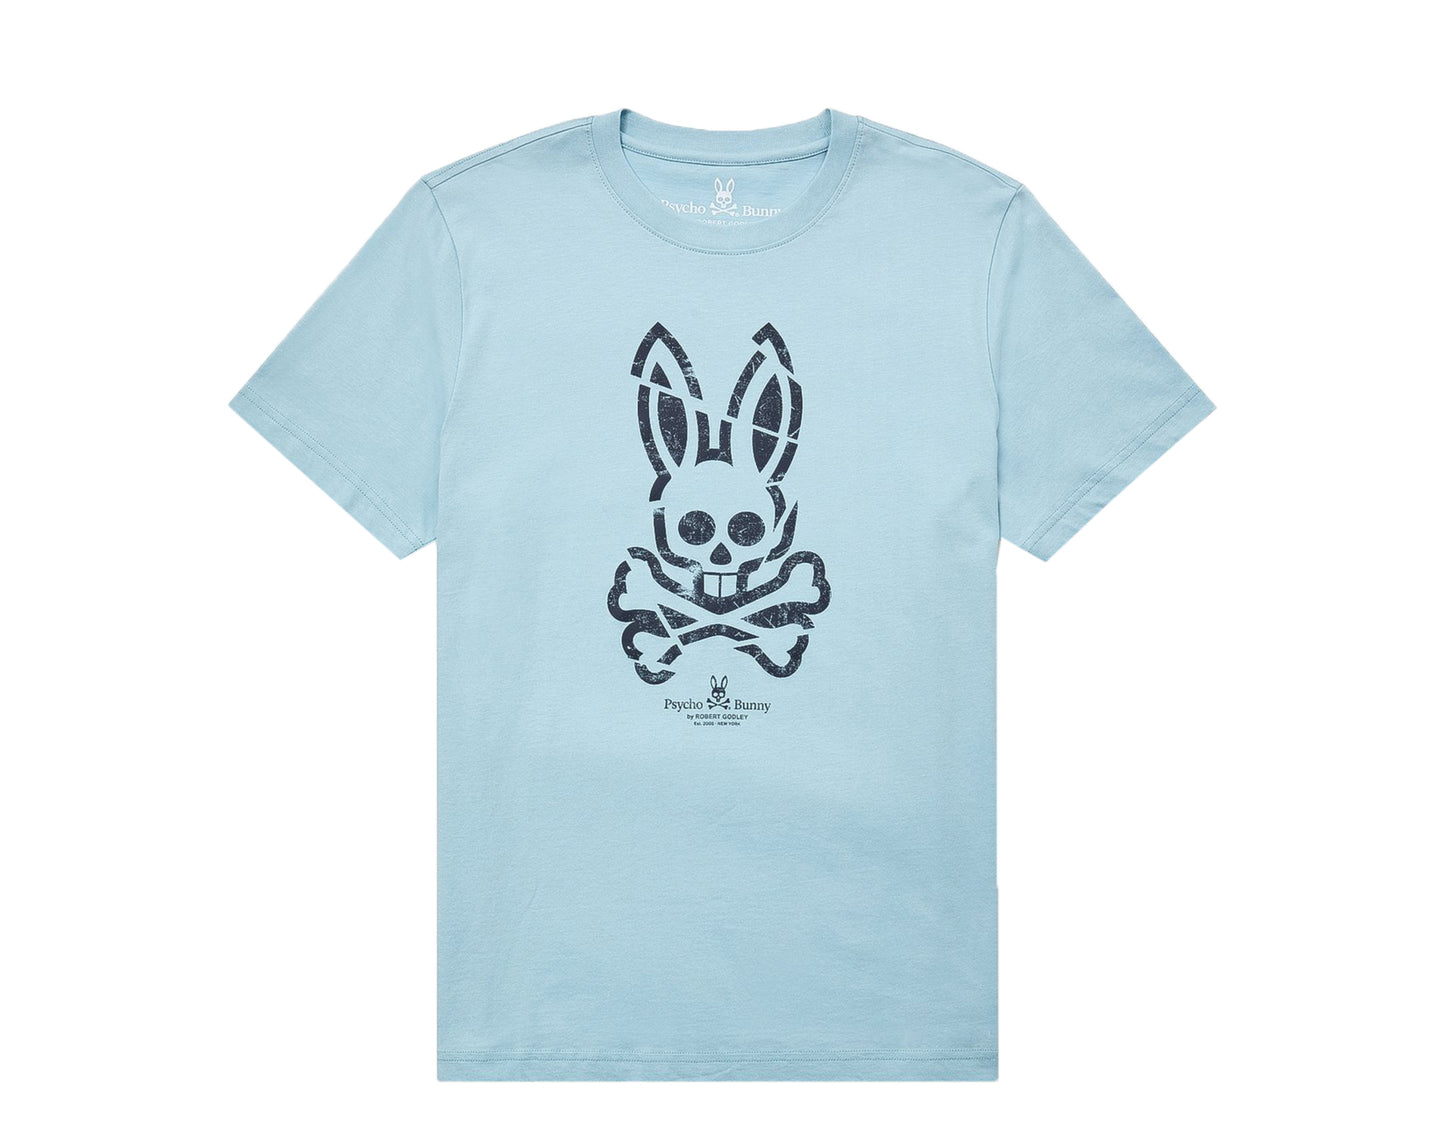 Psycho Bunny Teston Graphic Seafoam Blue Men's Tee Shirt B6U247E1PC-SEF